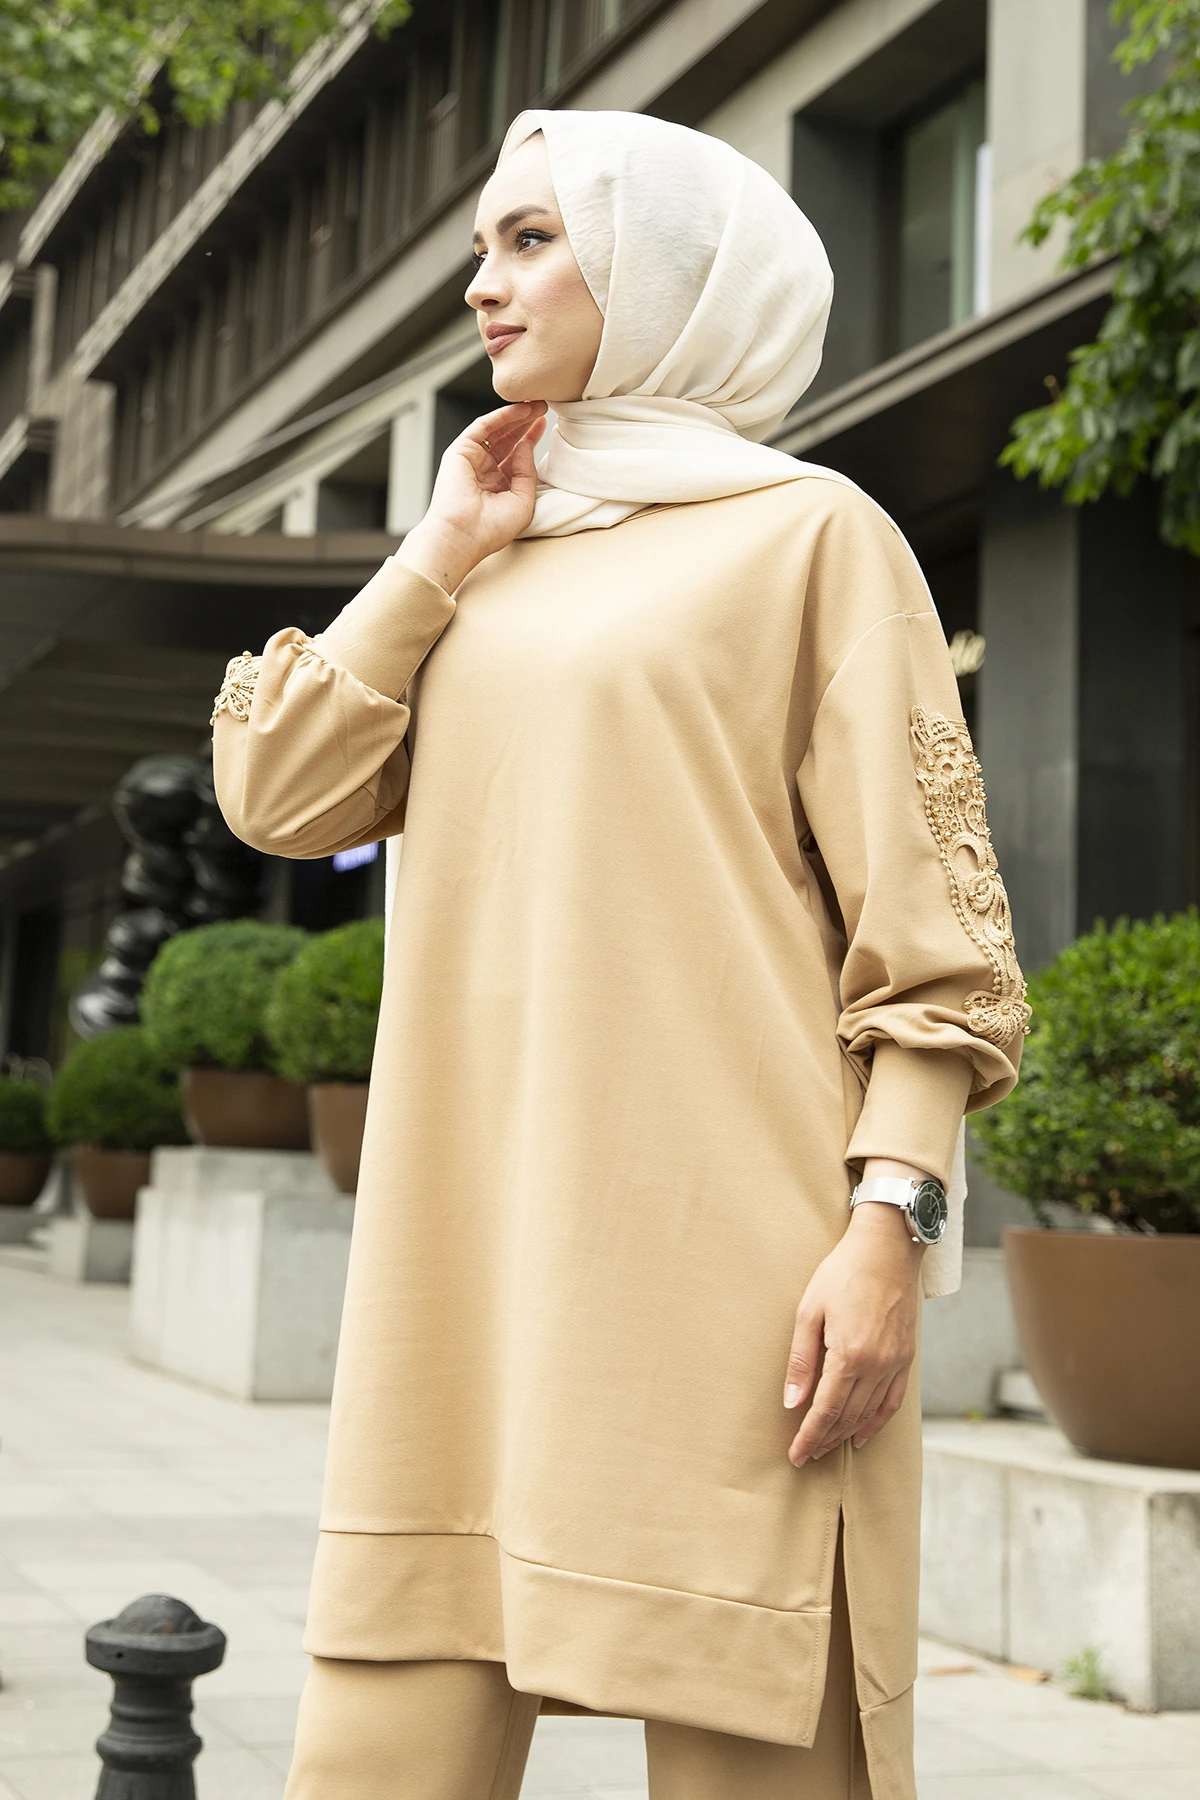 

Sleeve Lace Detailed Set Woman Islamic Wear Muslim Dress Fashion 2 colours